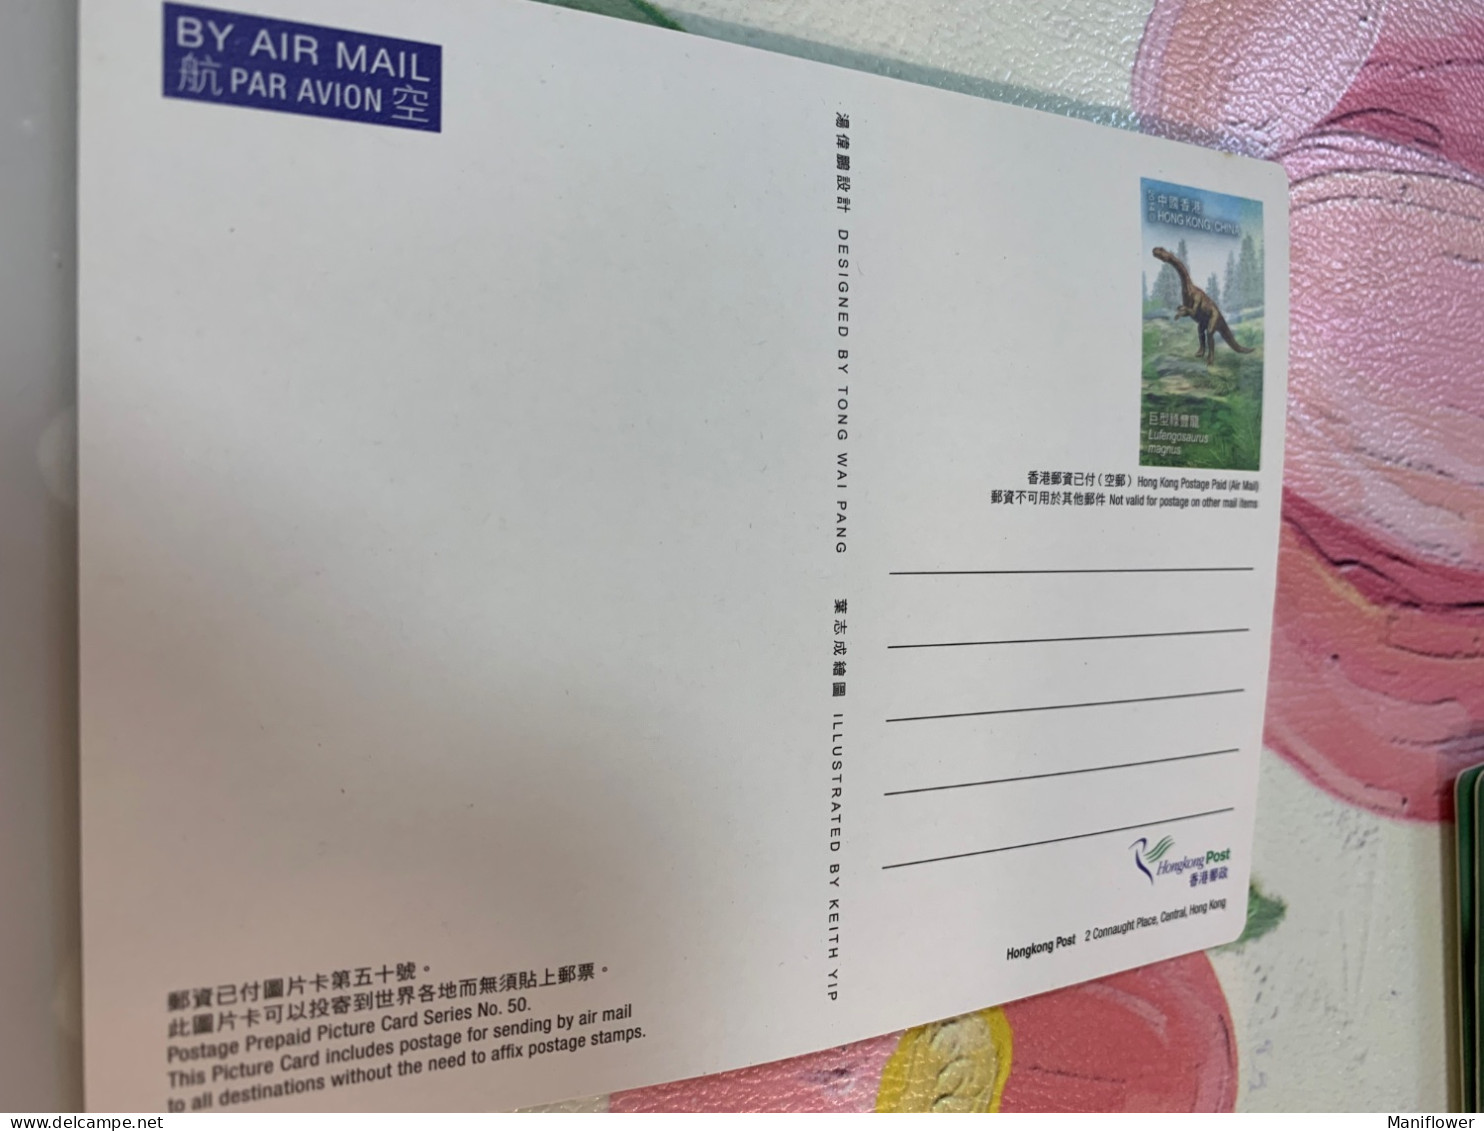 Hong Kong Stamp Dinosaur 3D Hologram 2014 - Lettres & Documents